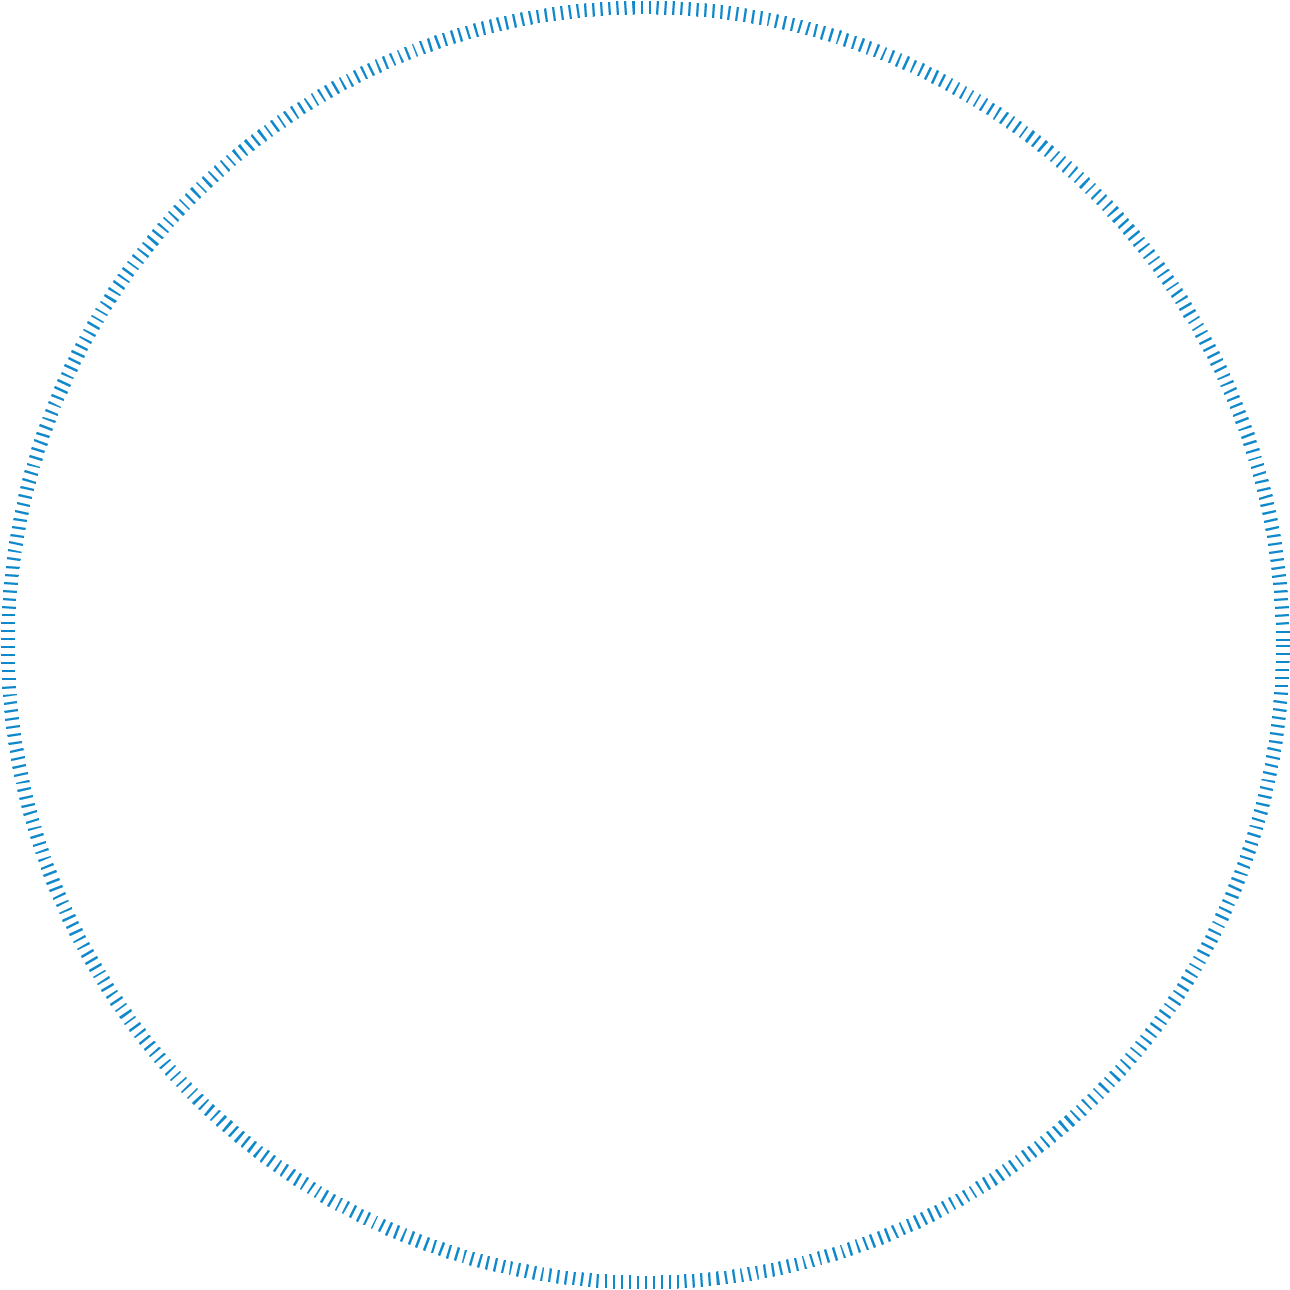 Circular Blue